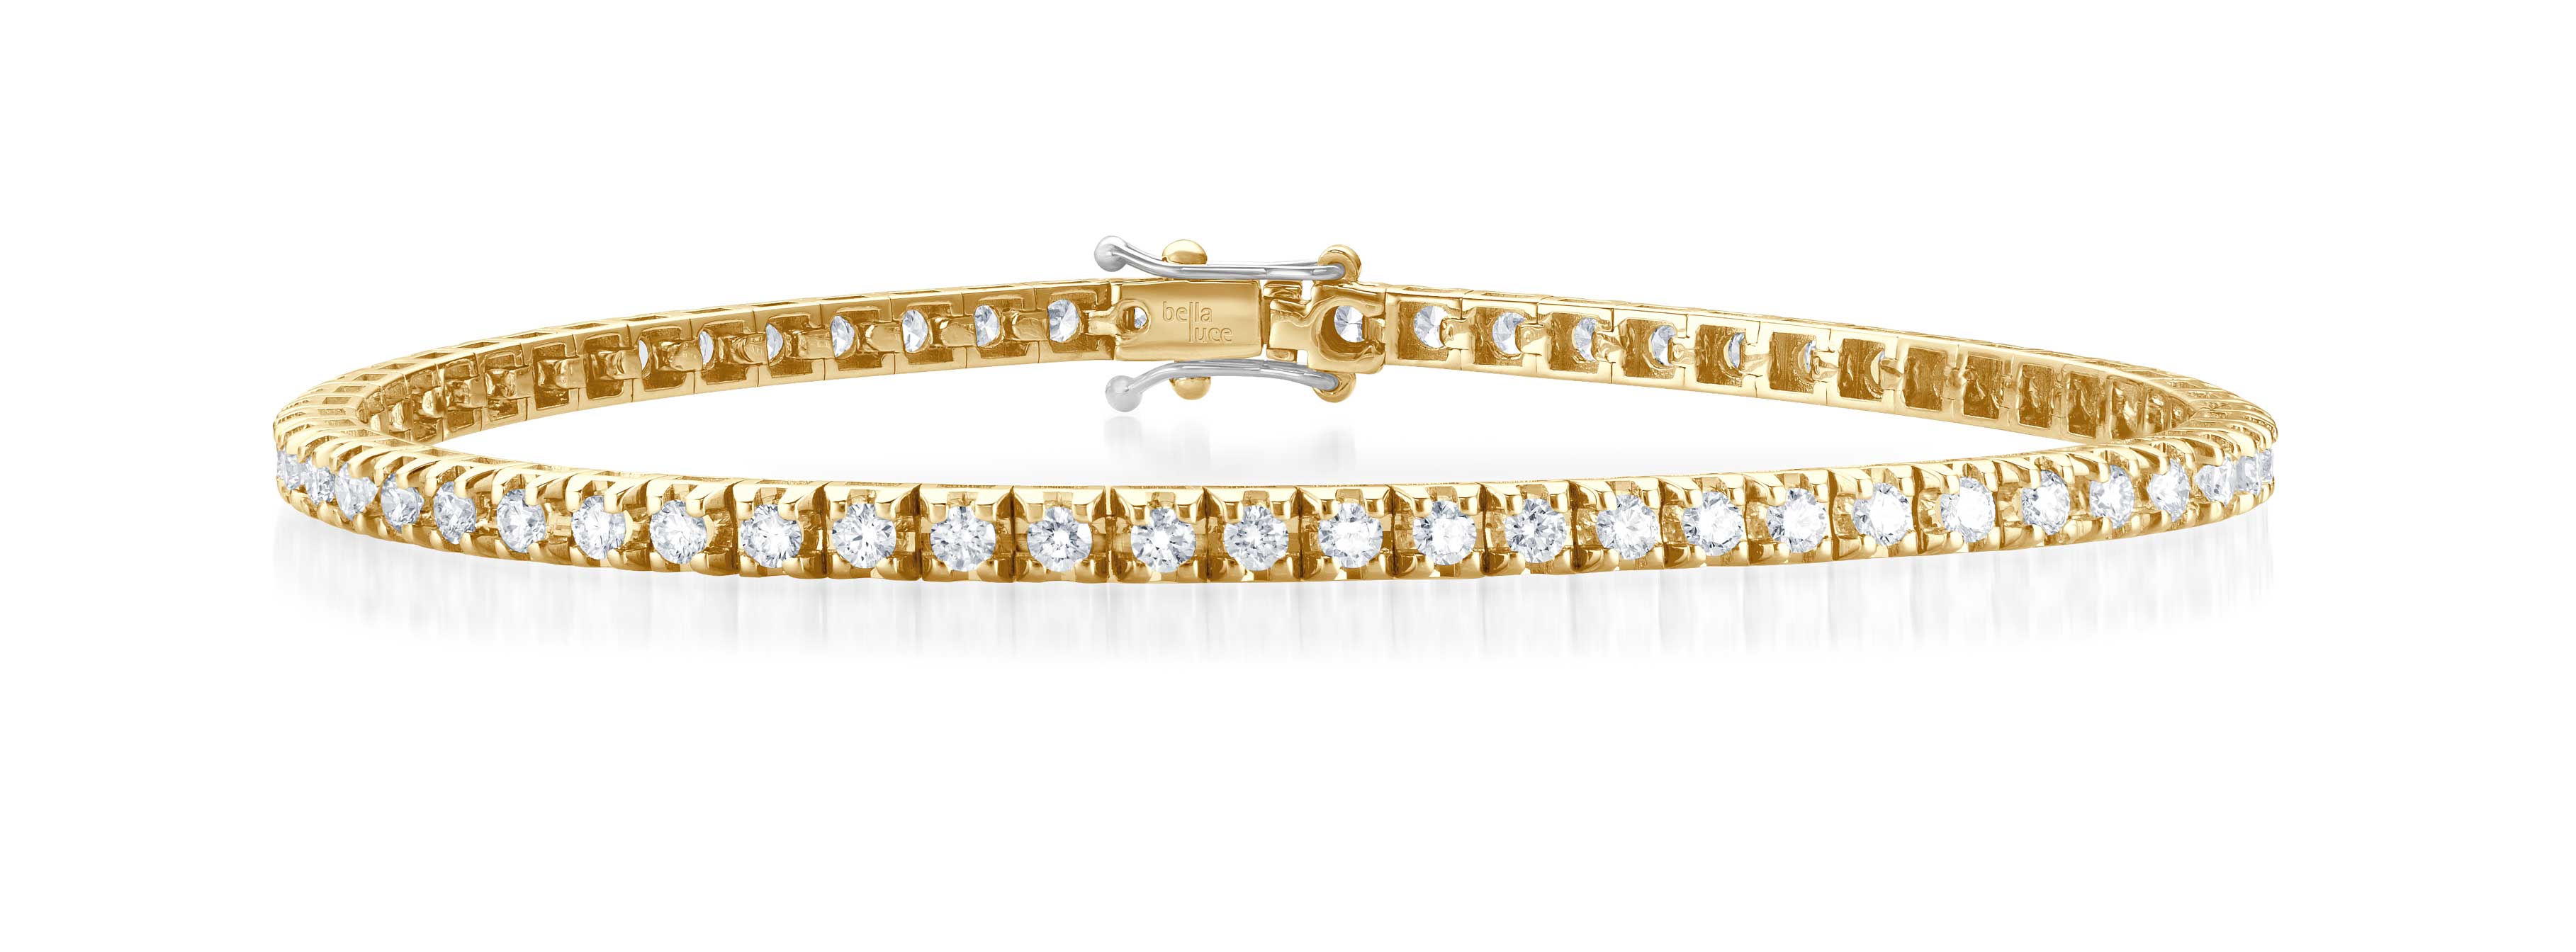 Brillant-Armband I Gold 585